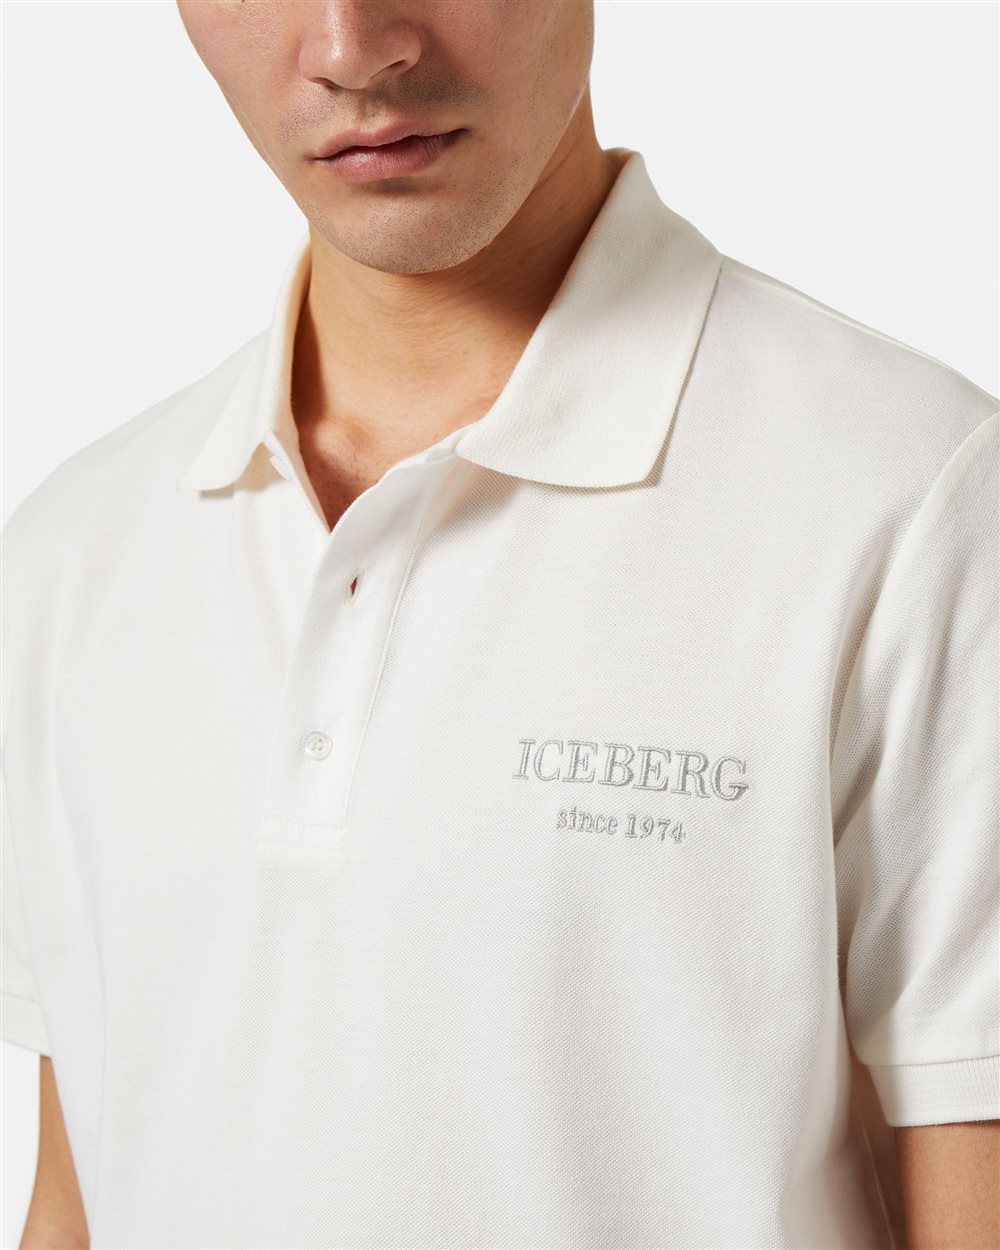 Polo shirt with logo - Iceberg - Official Website